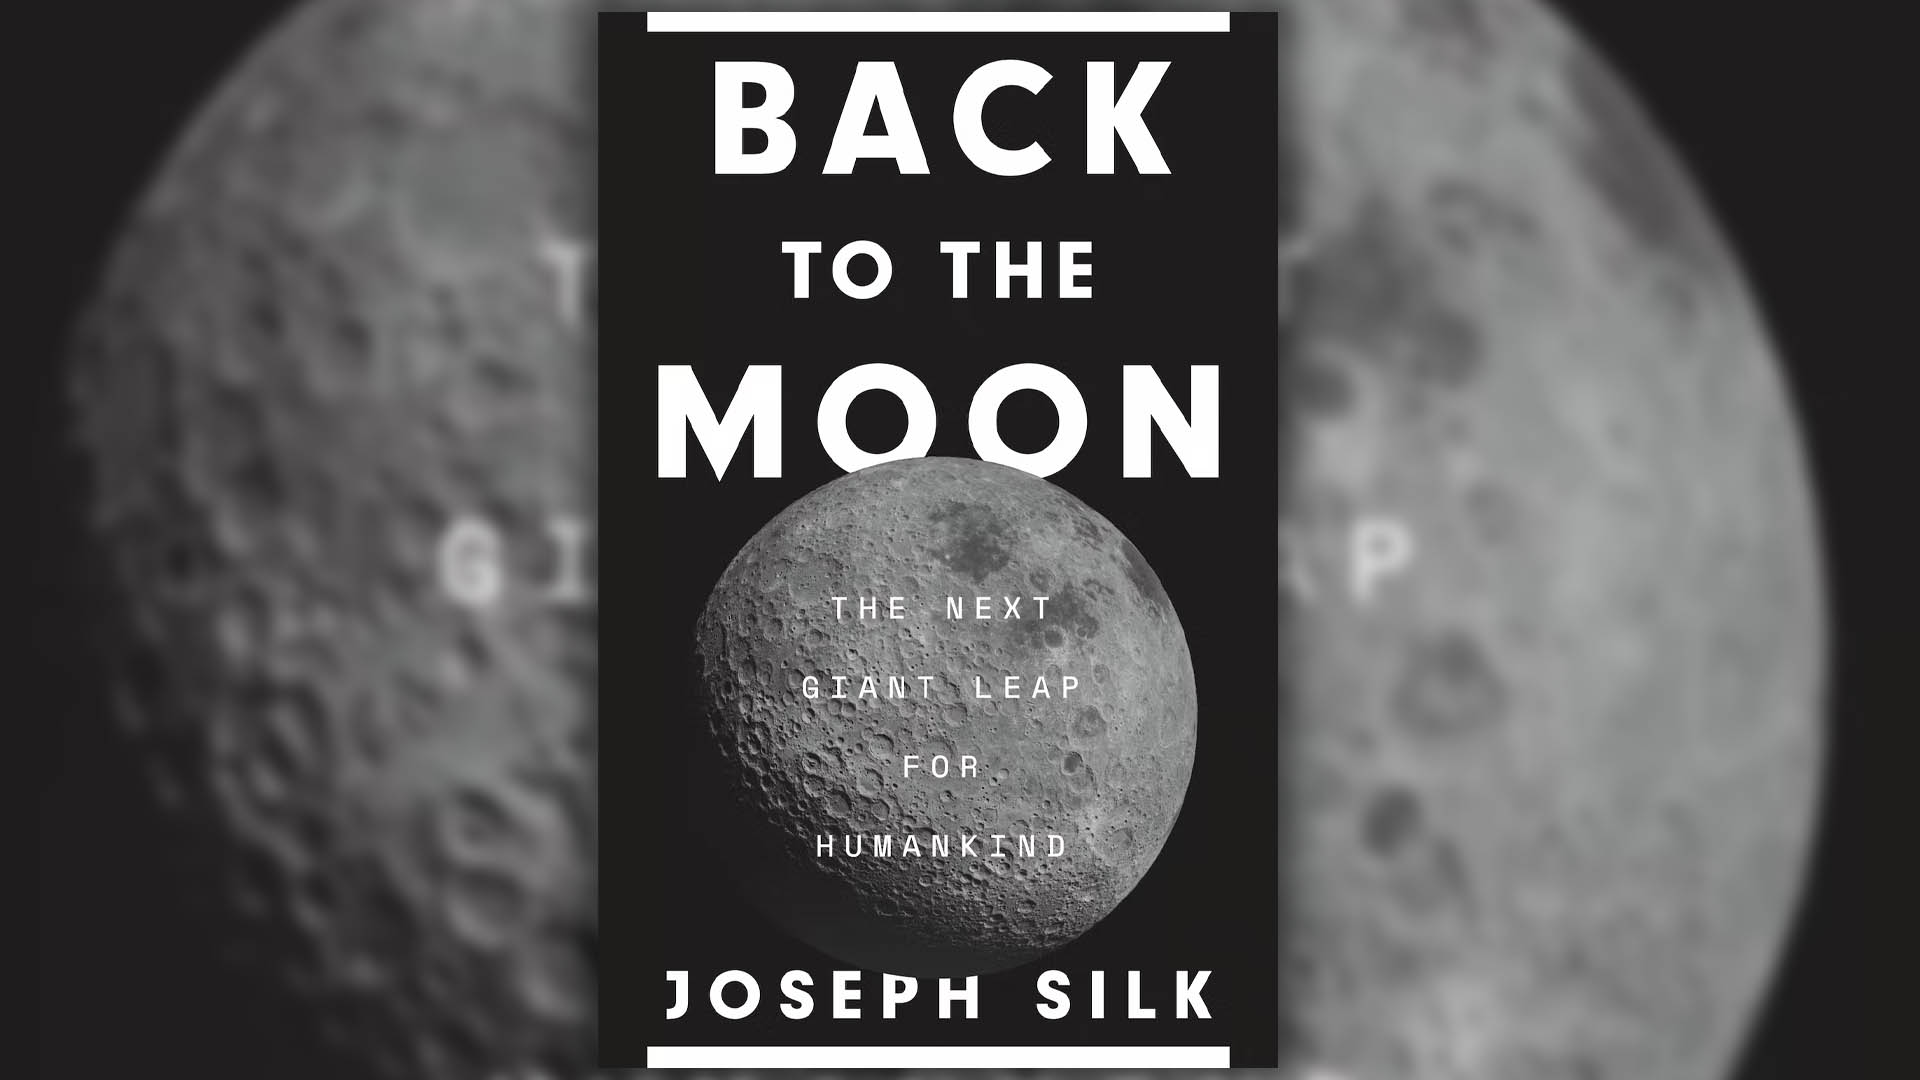 Portada de "Back to the moon" ("Regreso a la Luna), de Joseph Silk. 